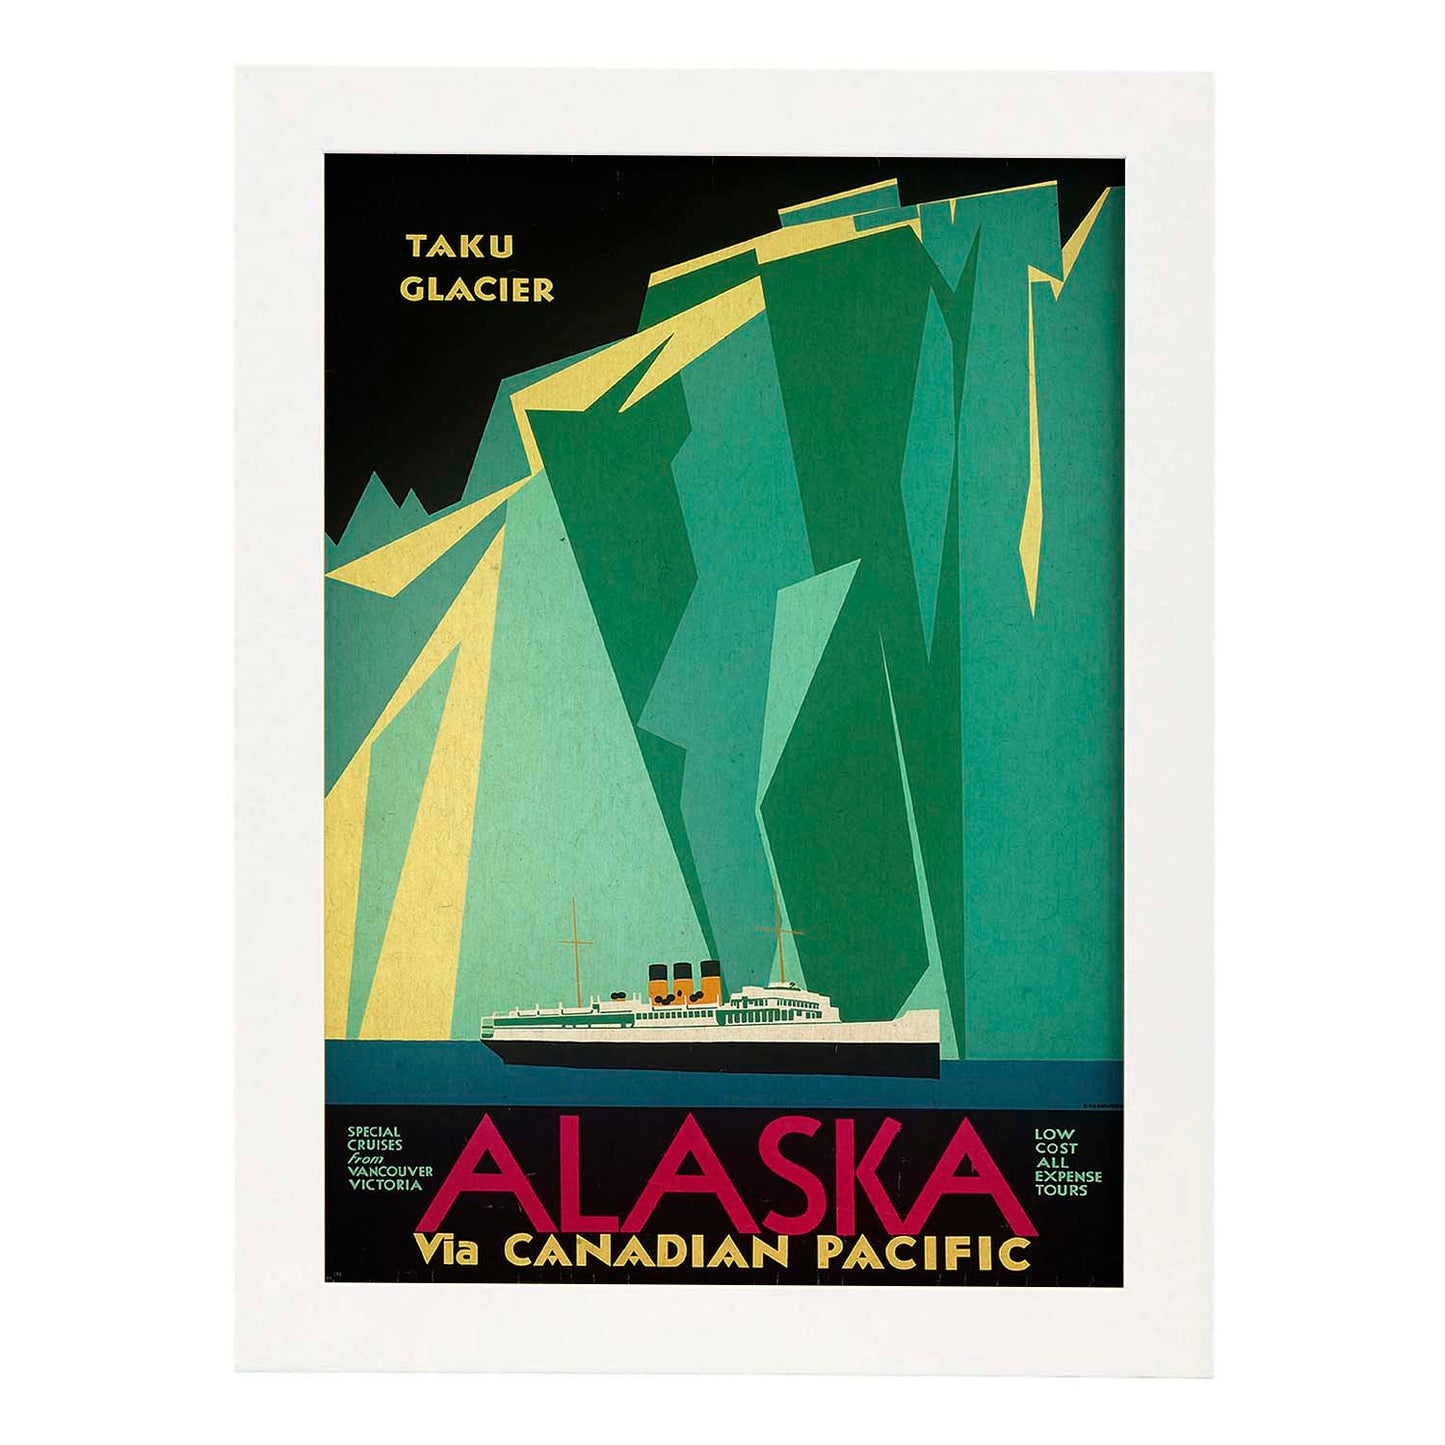 Poster vintage. Cartel vintage. Iceberg en Alaska.-Artwork-Nacnic-A4-Marco Blanco-Nacnic Estudio SL